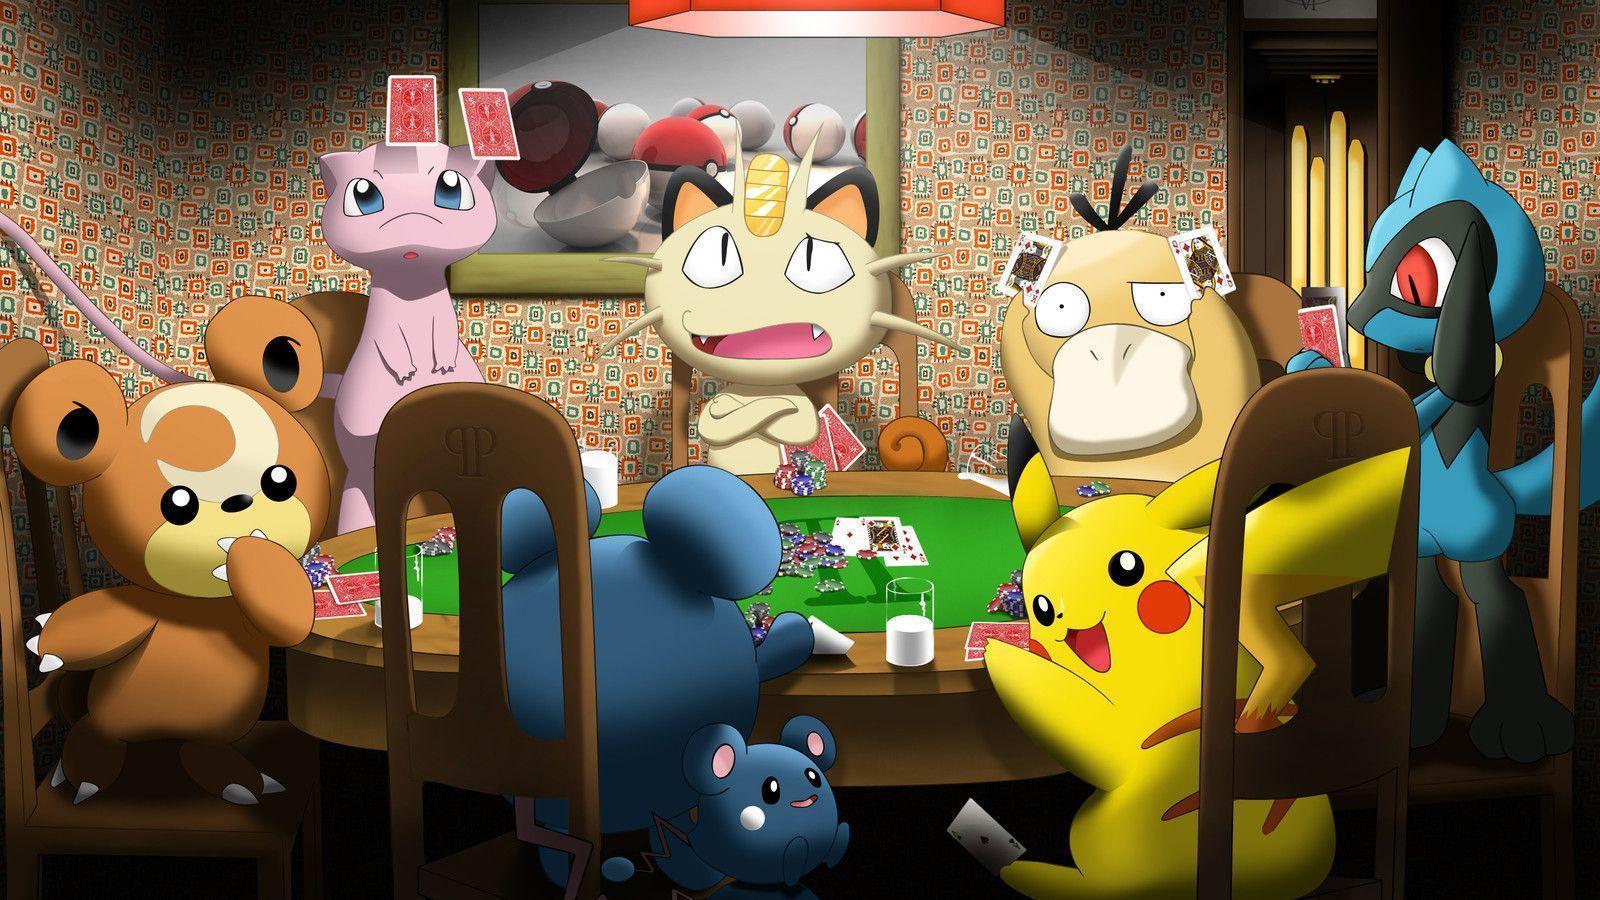 Download Pokemon Wallpaper 1600x900. Full HD Wallpaper